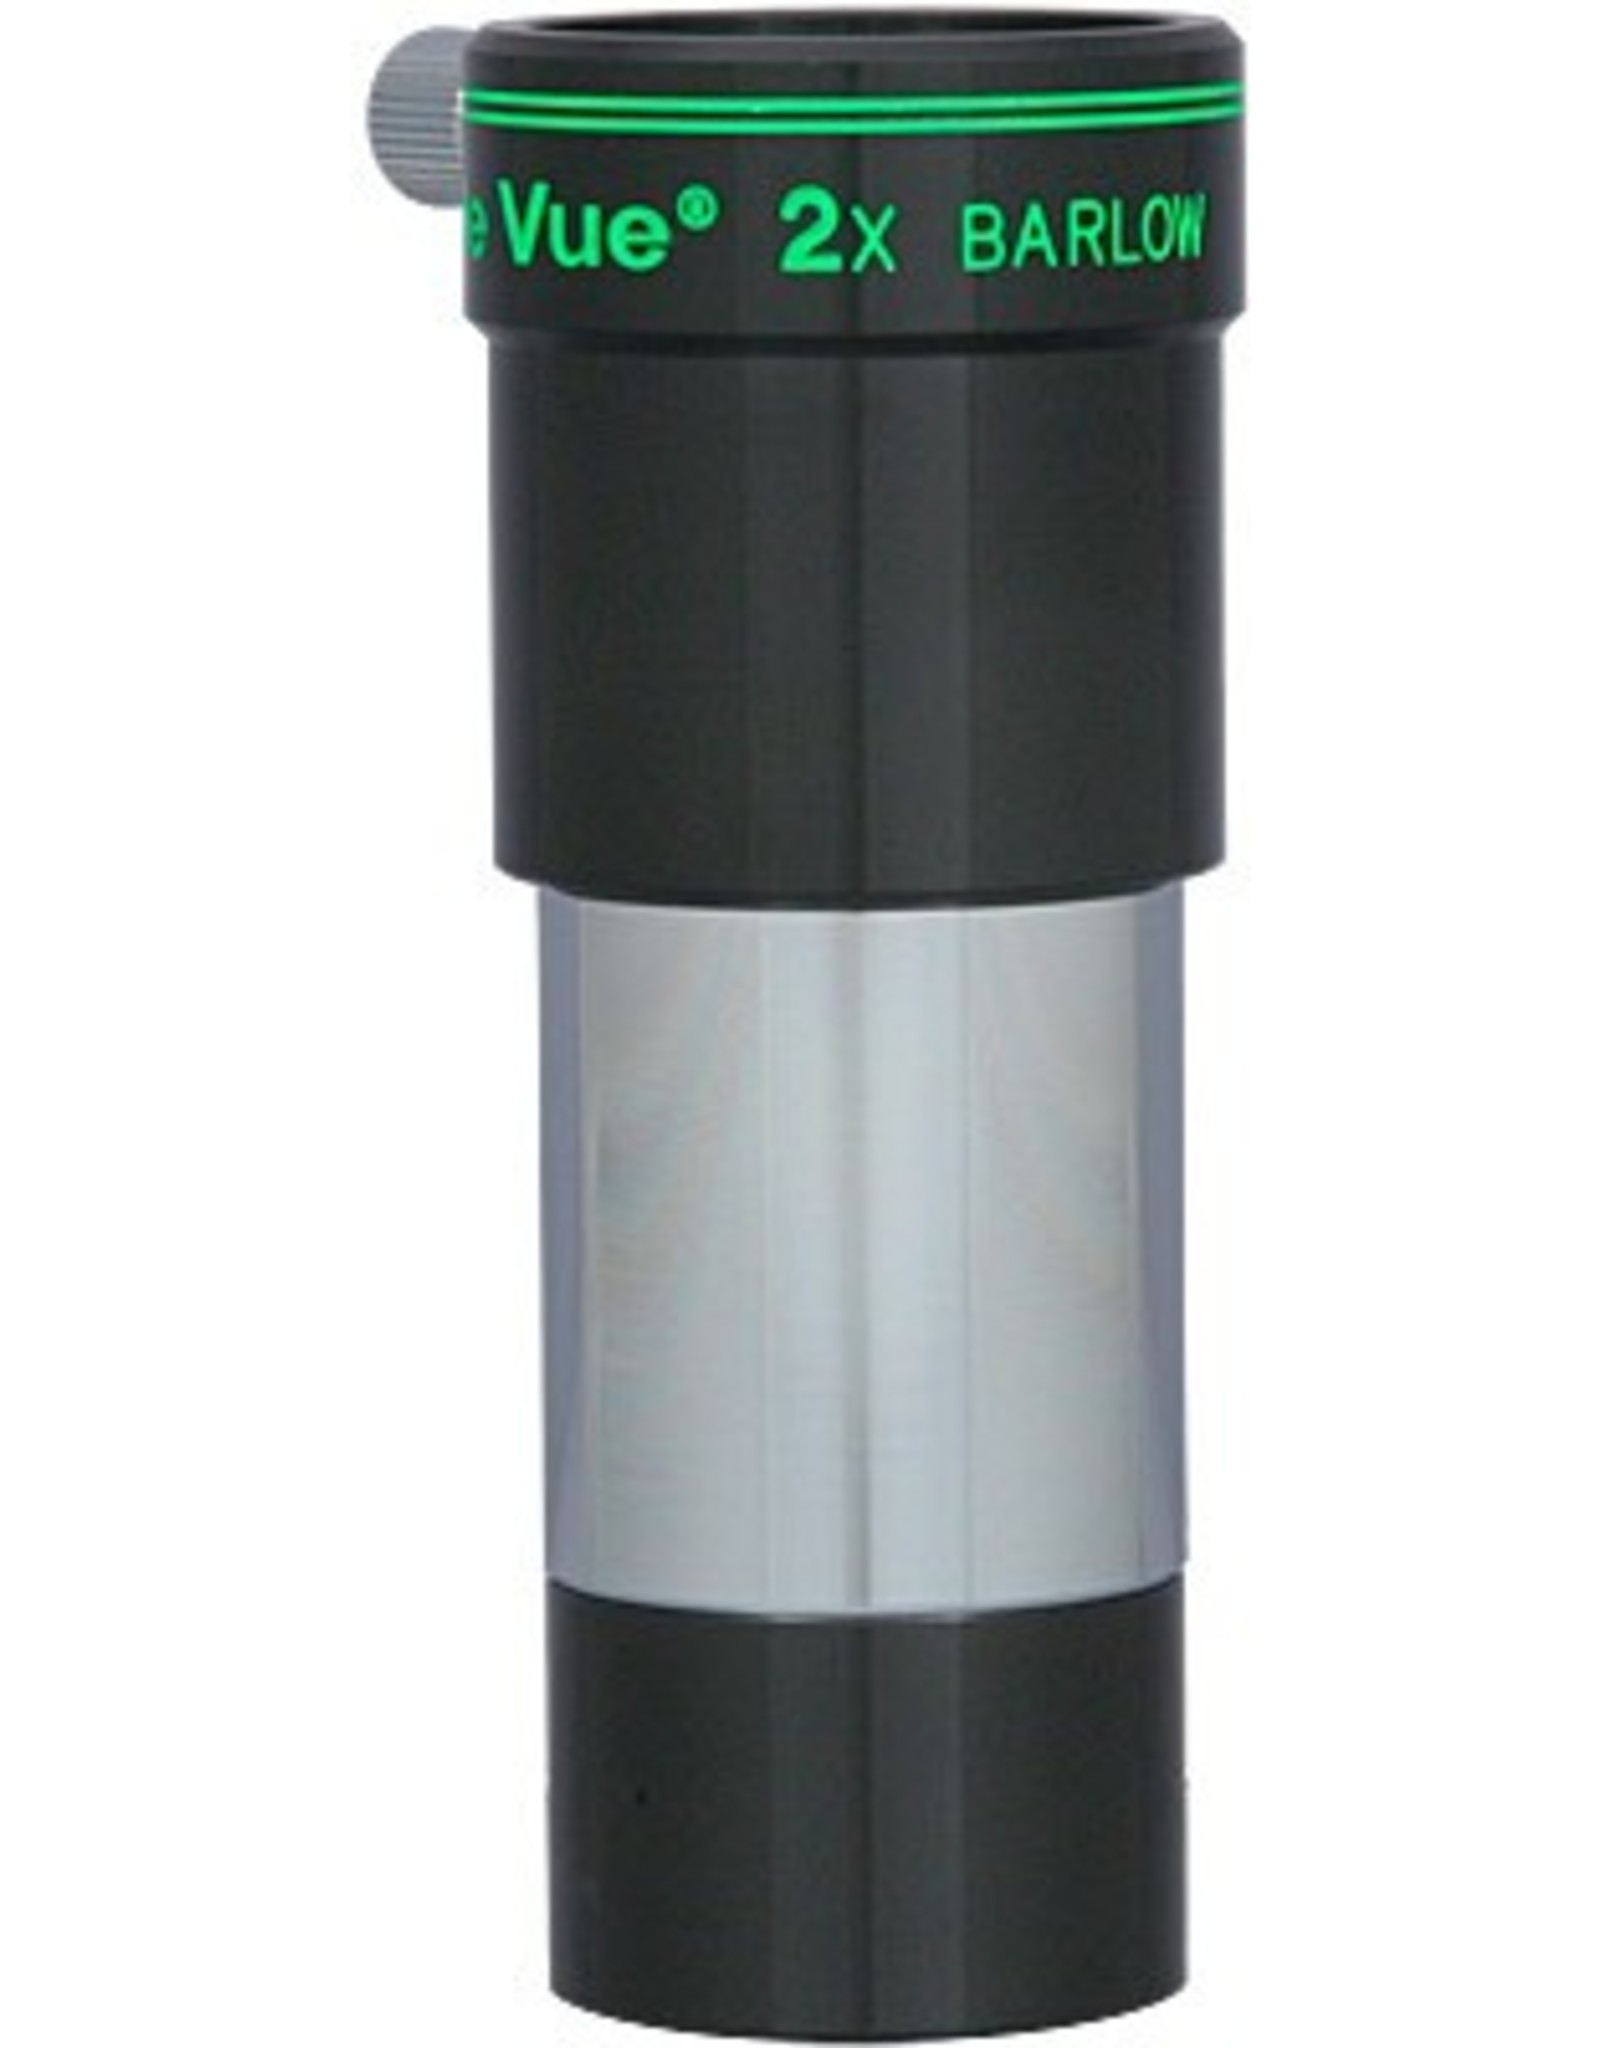 Tele Vue 2X Barlow - 1.25